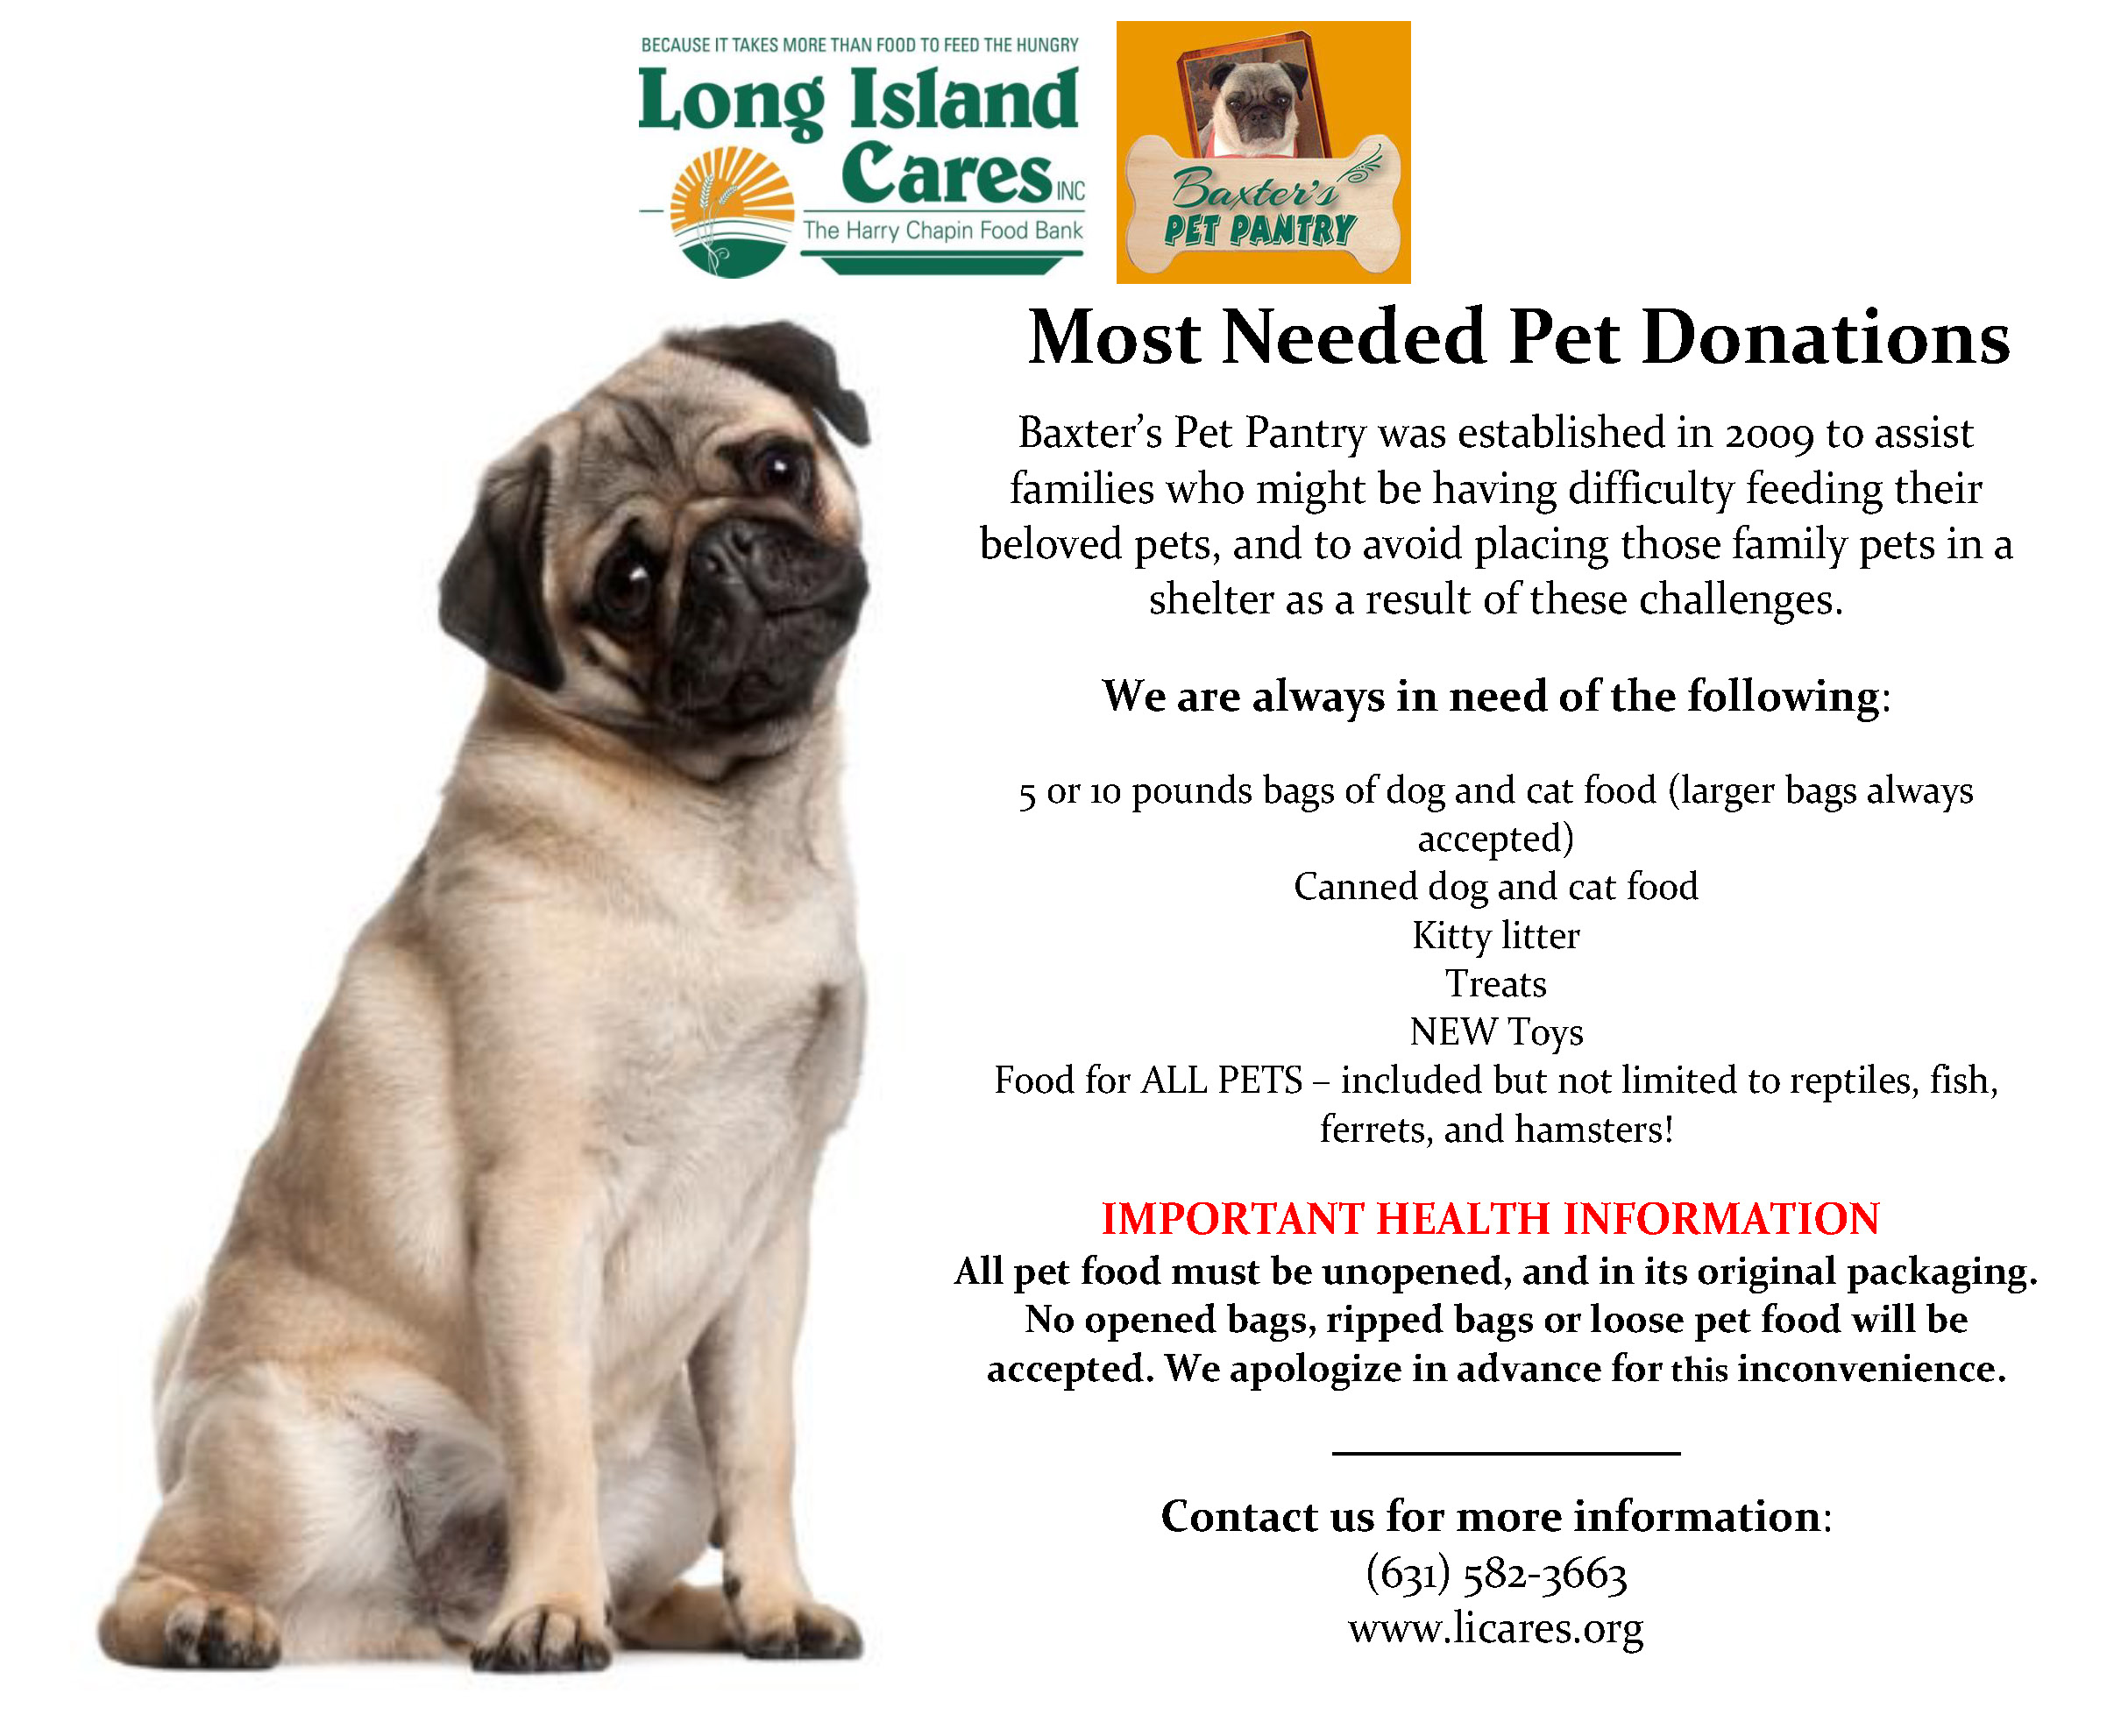 Calling All Pet Lovers: Baxter's Pet Pantry Seeking Donations